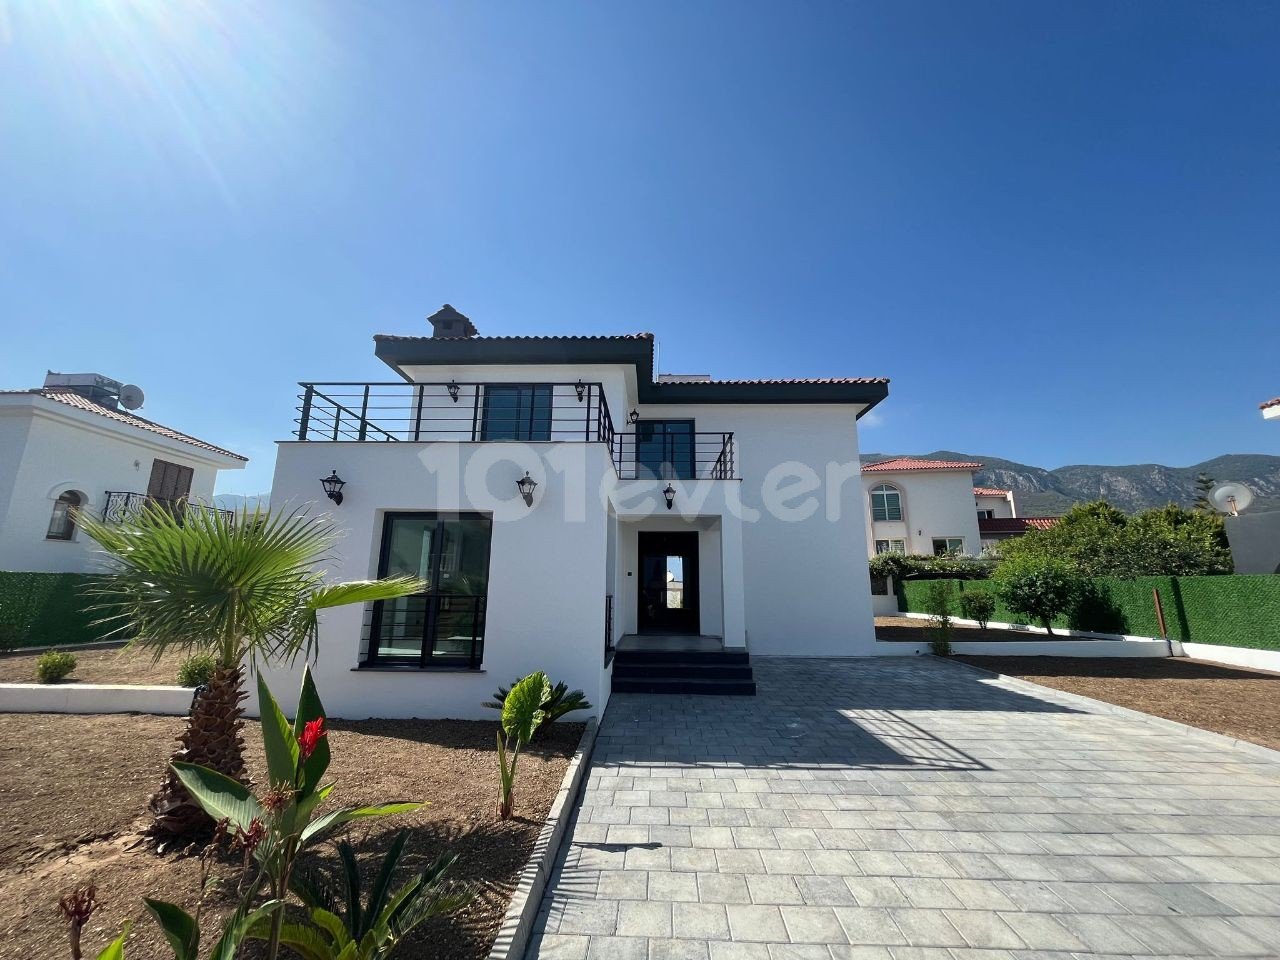 Satılık Villa - Bellapais, Girne, Kuzey Kıbrıs-f6ace82a-11f7-424a-80b2-cb36af1b8851